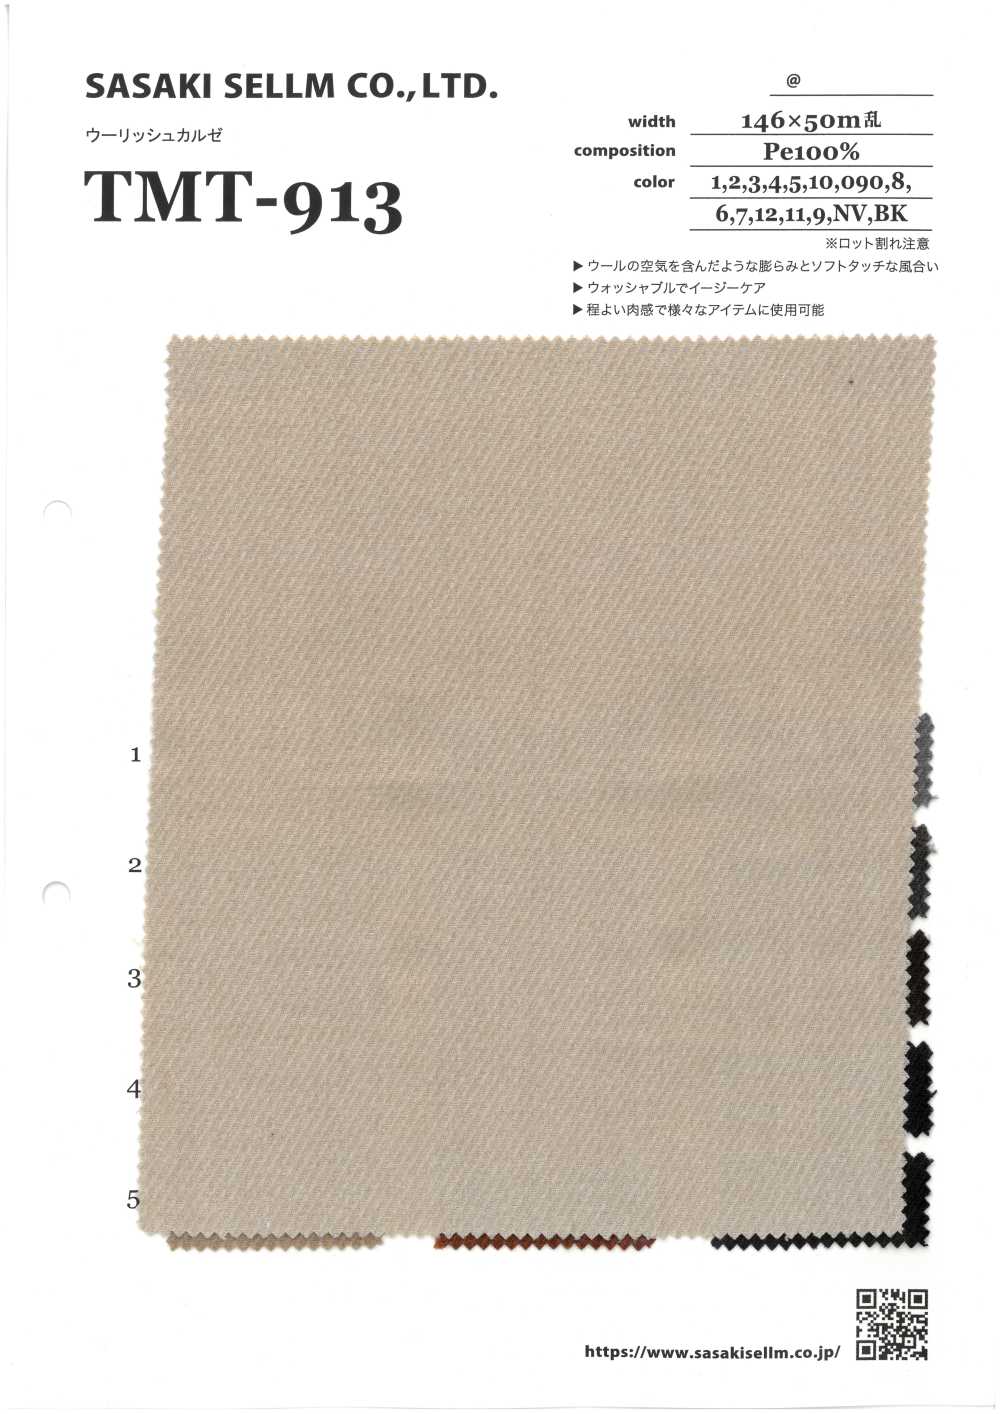 TMT-913 Kersey[Fabrication De Textile] SASAKISELLM